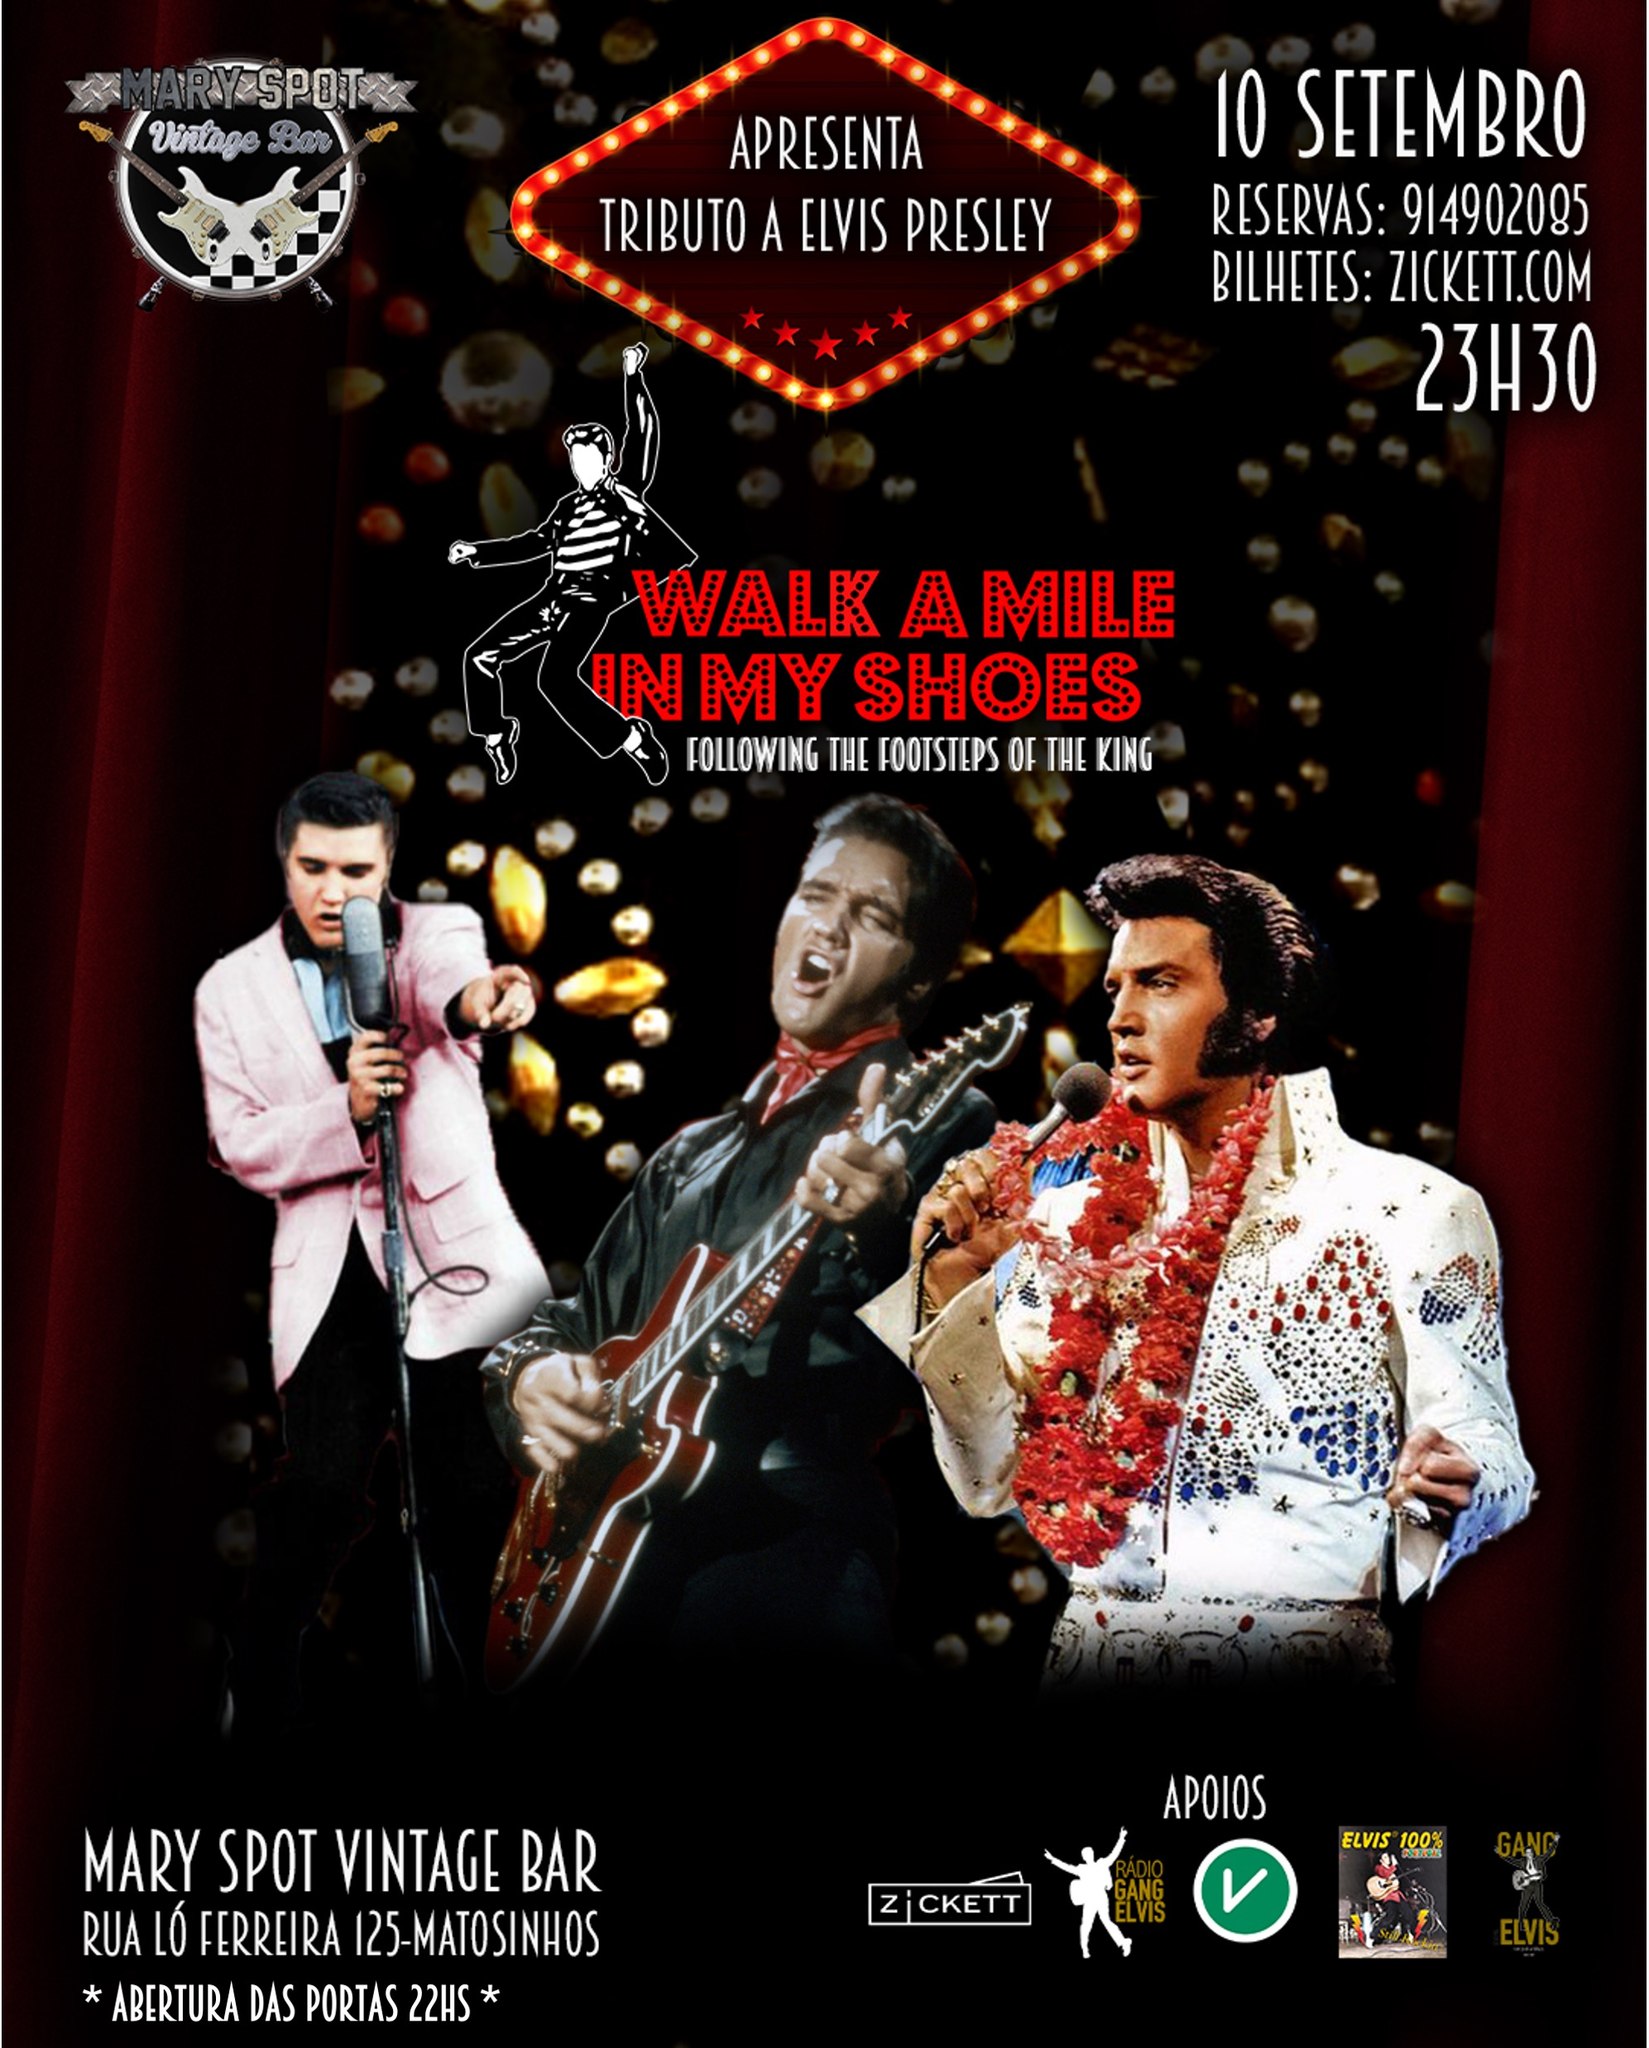 WALK A MILE IN MY SHOES - Tributo Elvis Presley @ Mary Spot Vintage Bar - Matosinhos